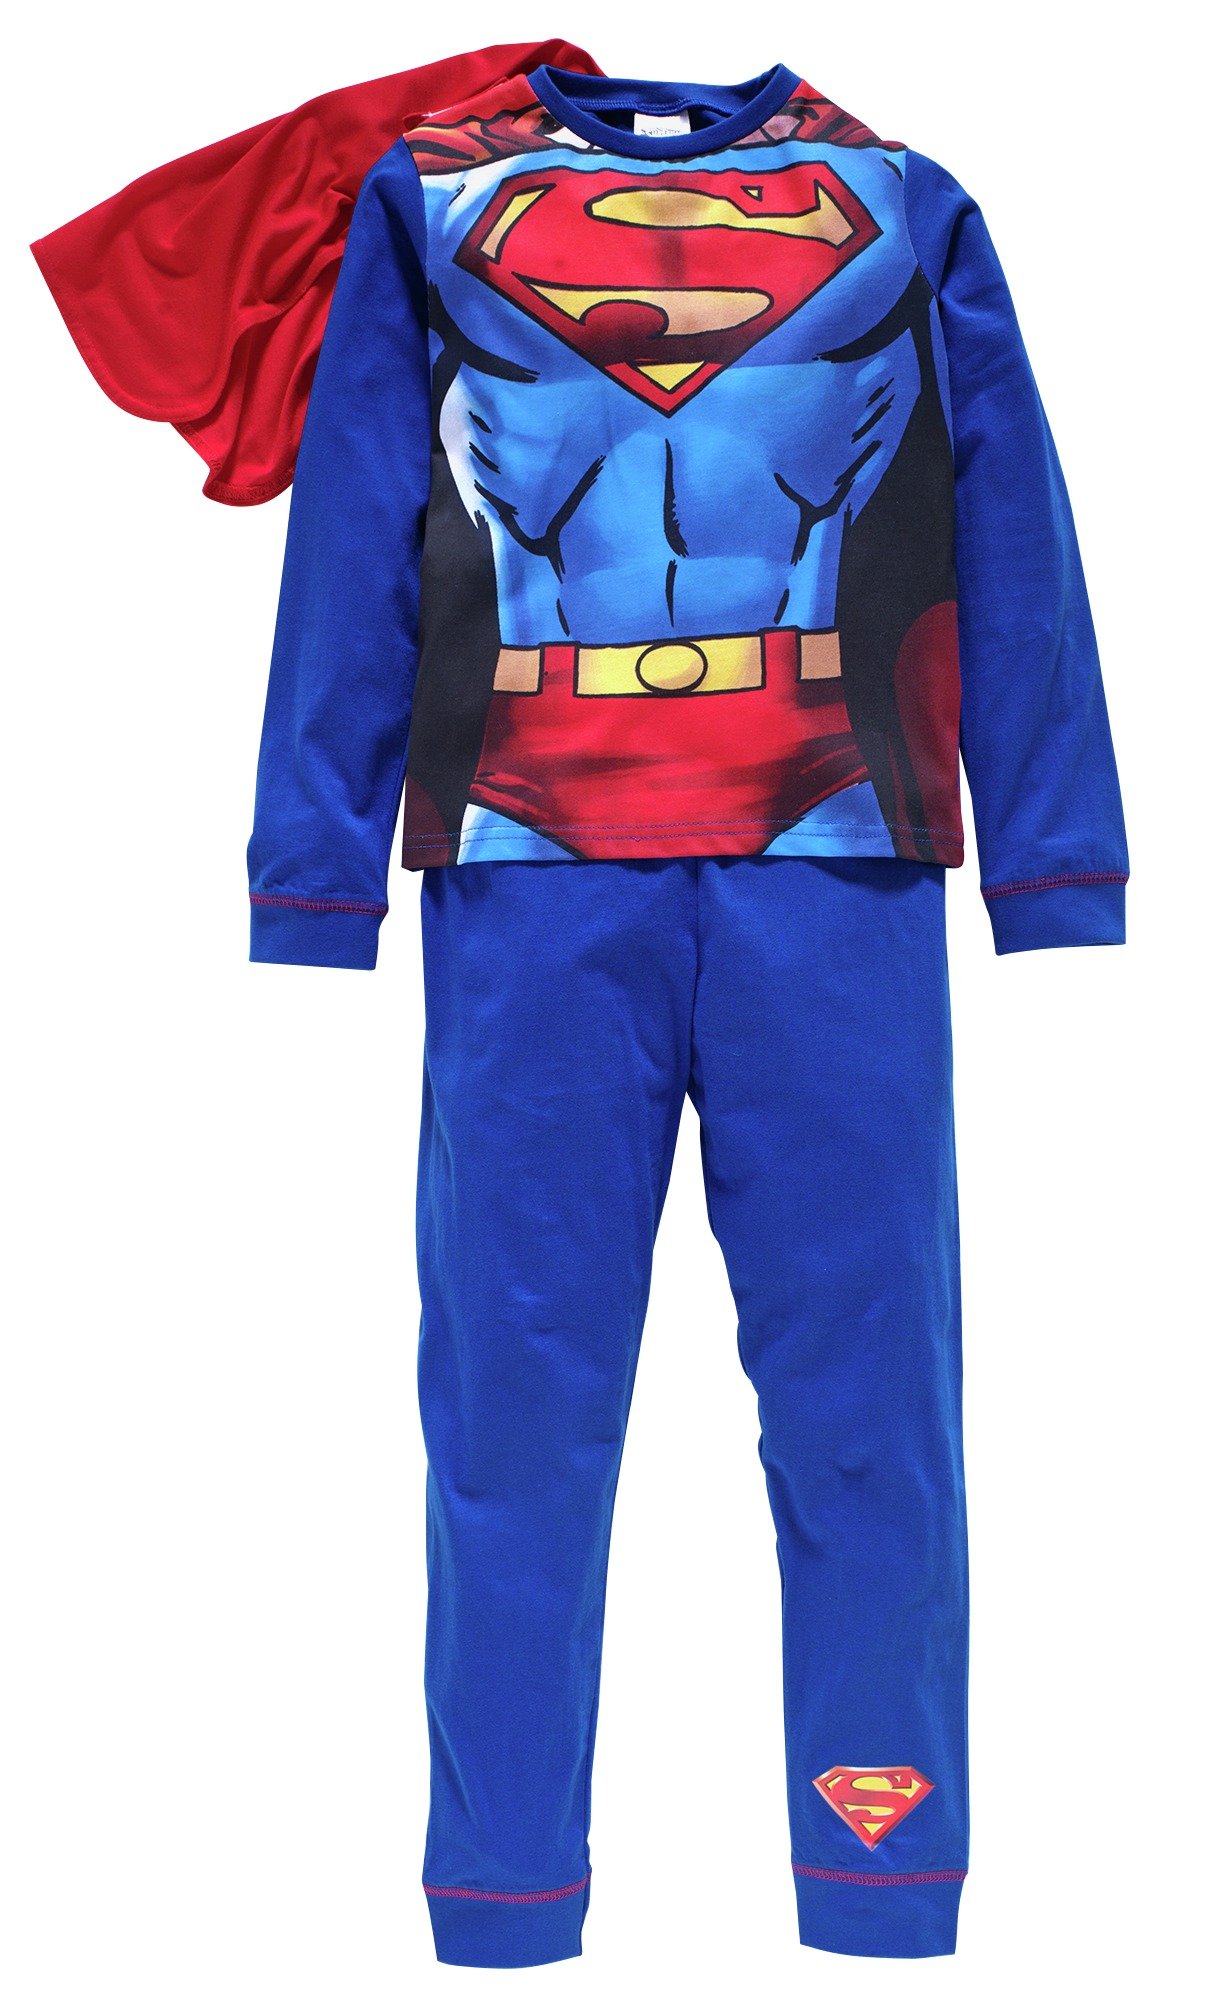 Superman Novelty Pyjamas with Cape - 5-6 Years